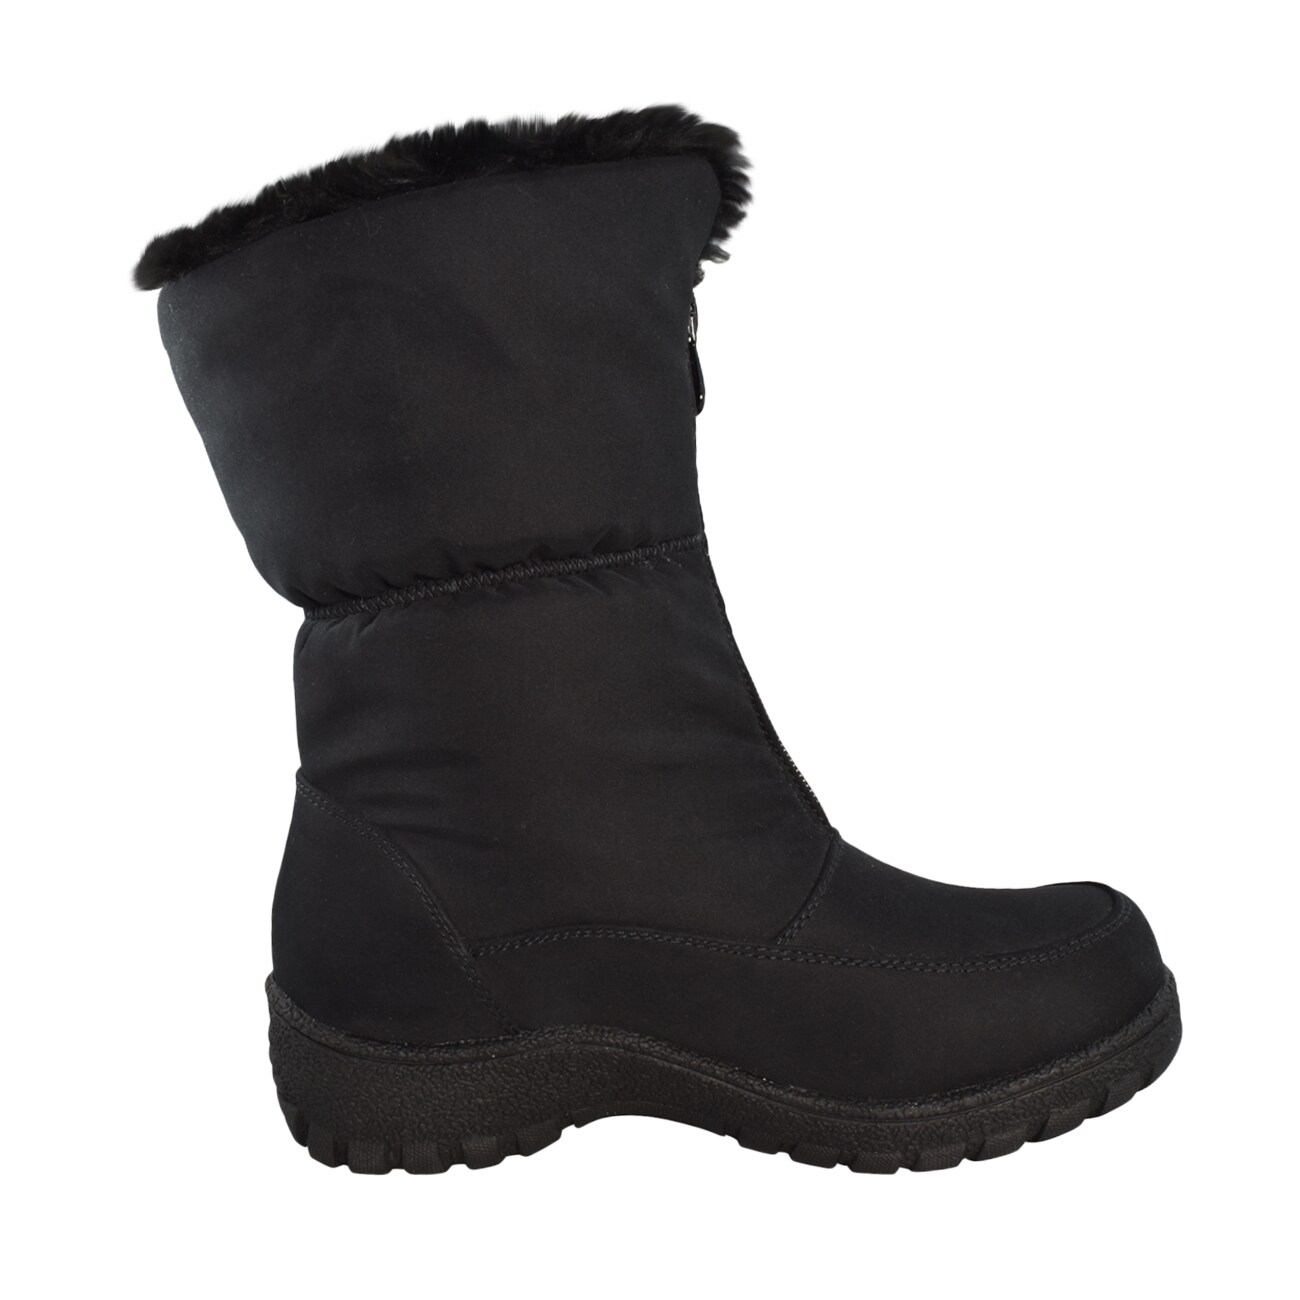 toe warmers boots company